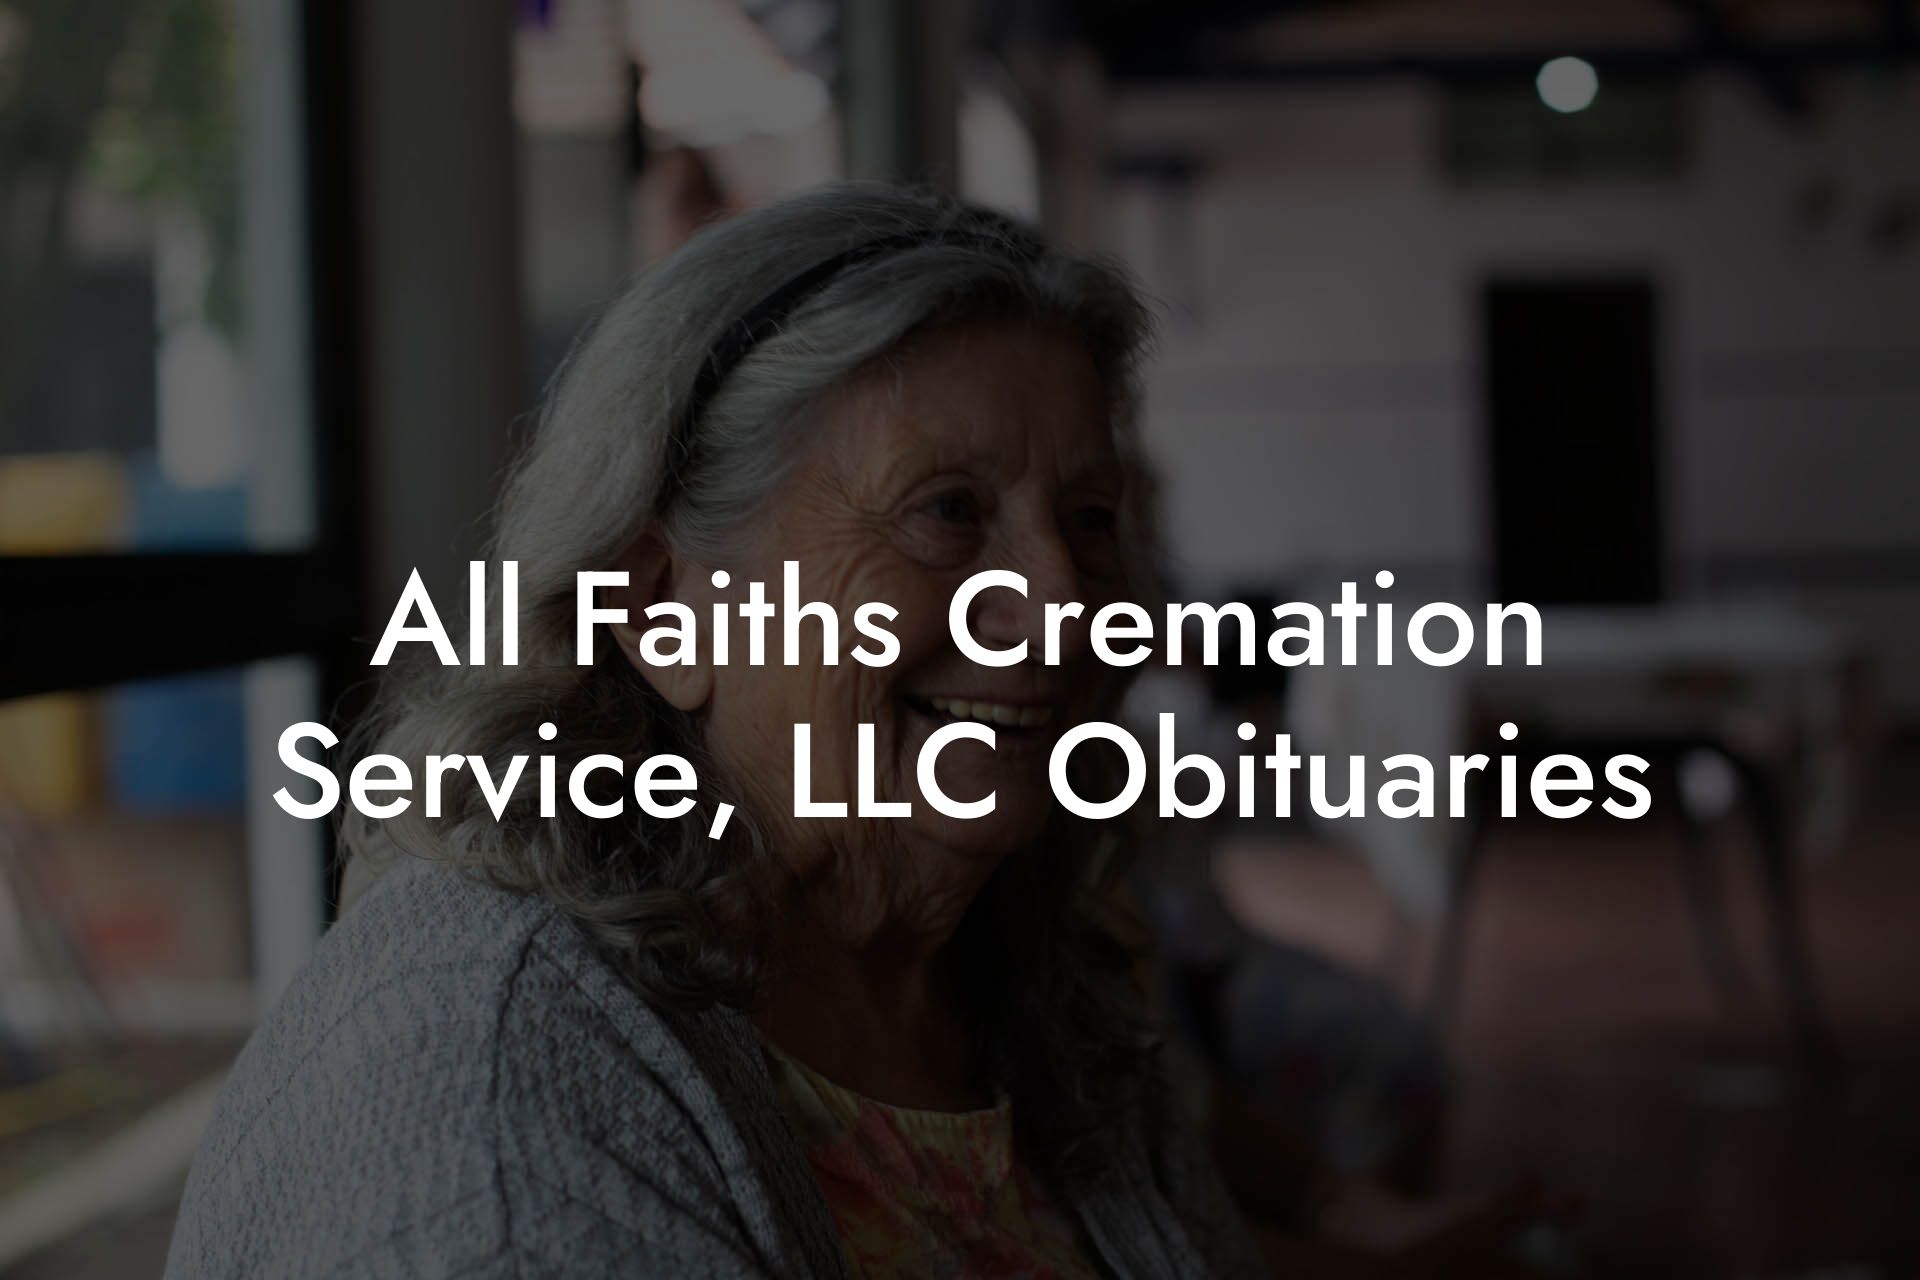 All Faiths Cremation Service, LLC Obituaries